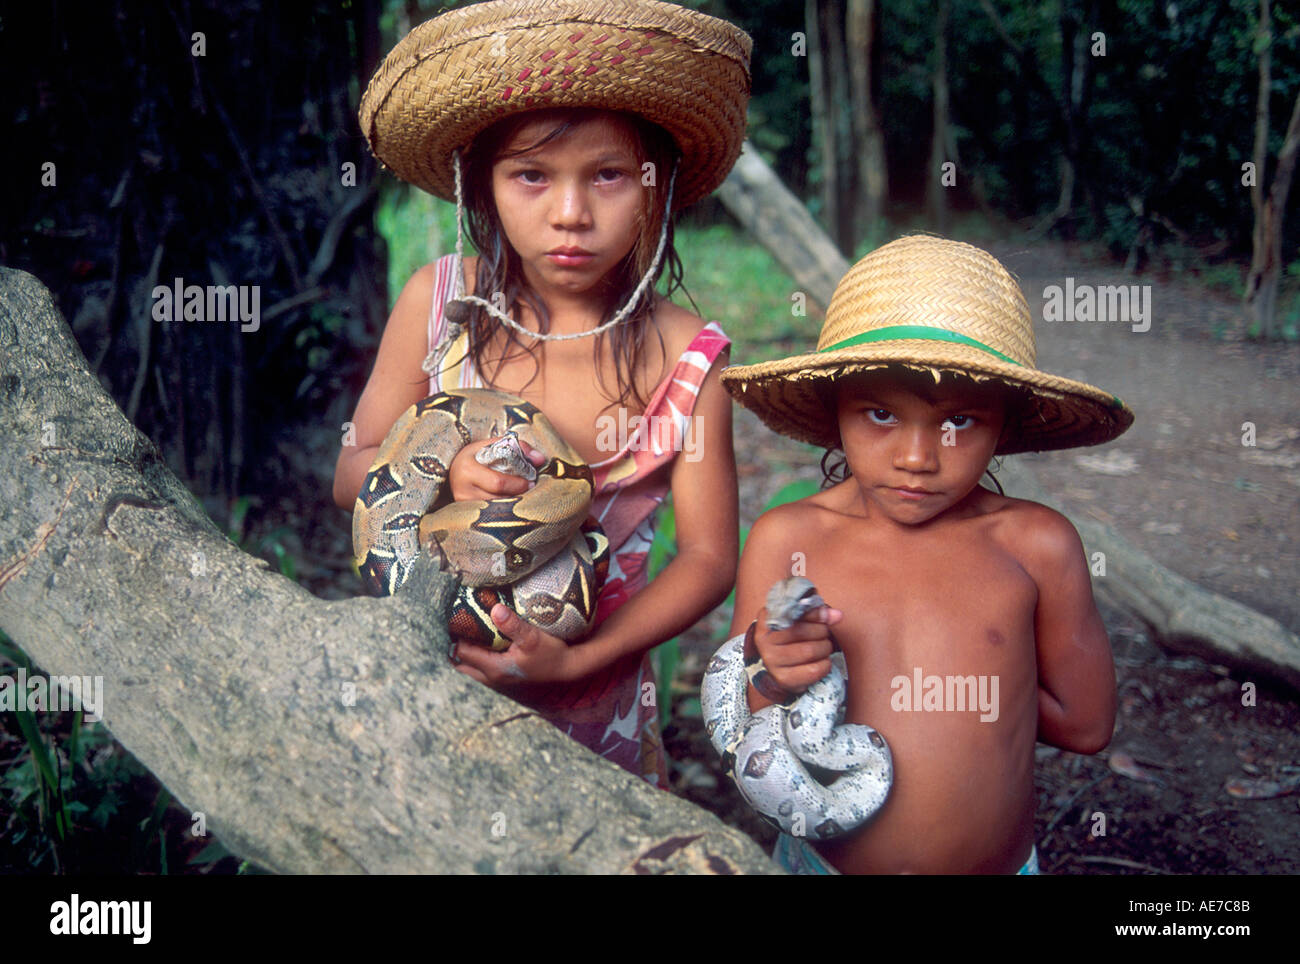 Amazon bambini nativi pongono con serpenti vicino a Manaus Brasile Foto  stock - Alamy